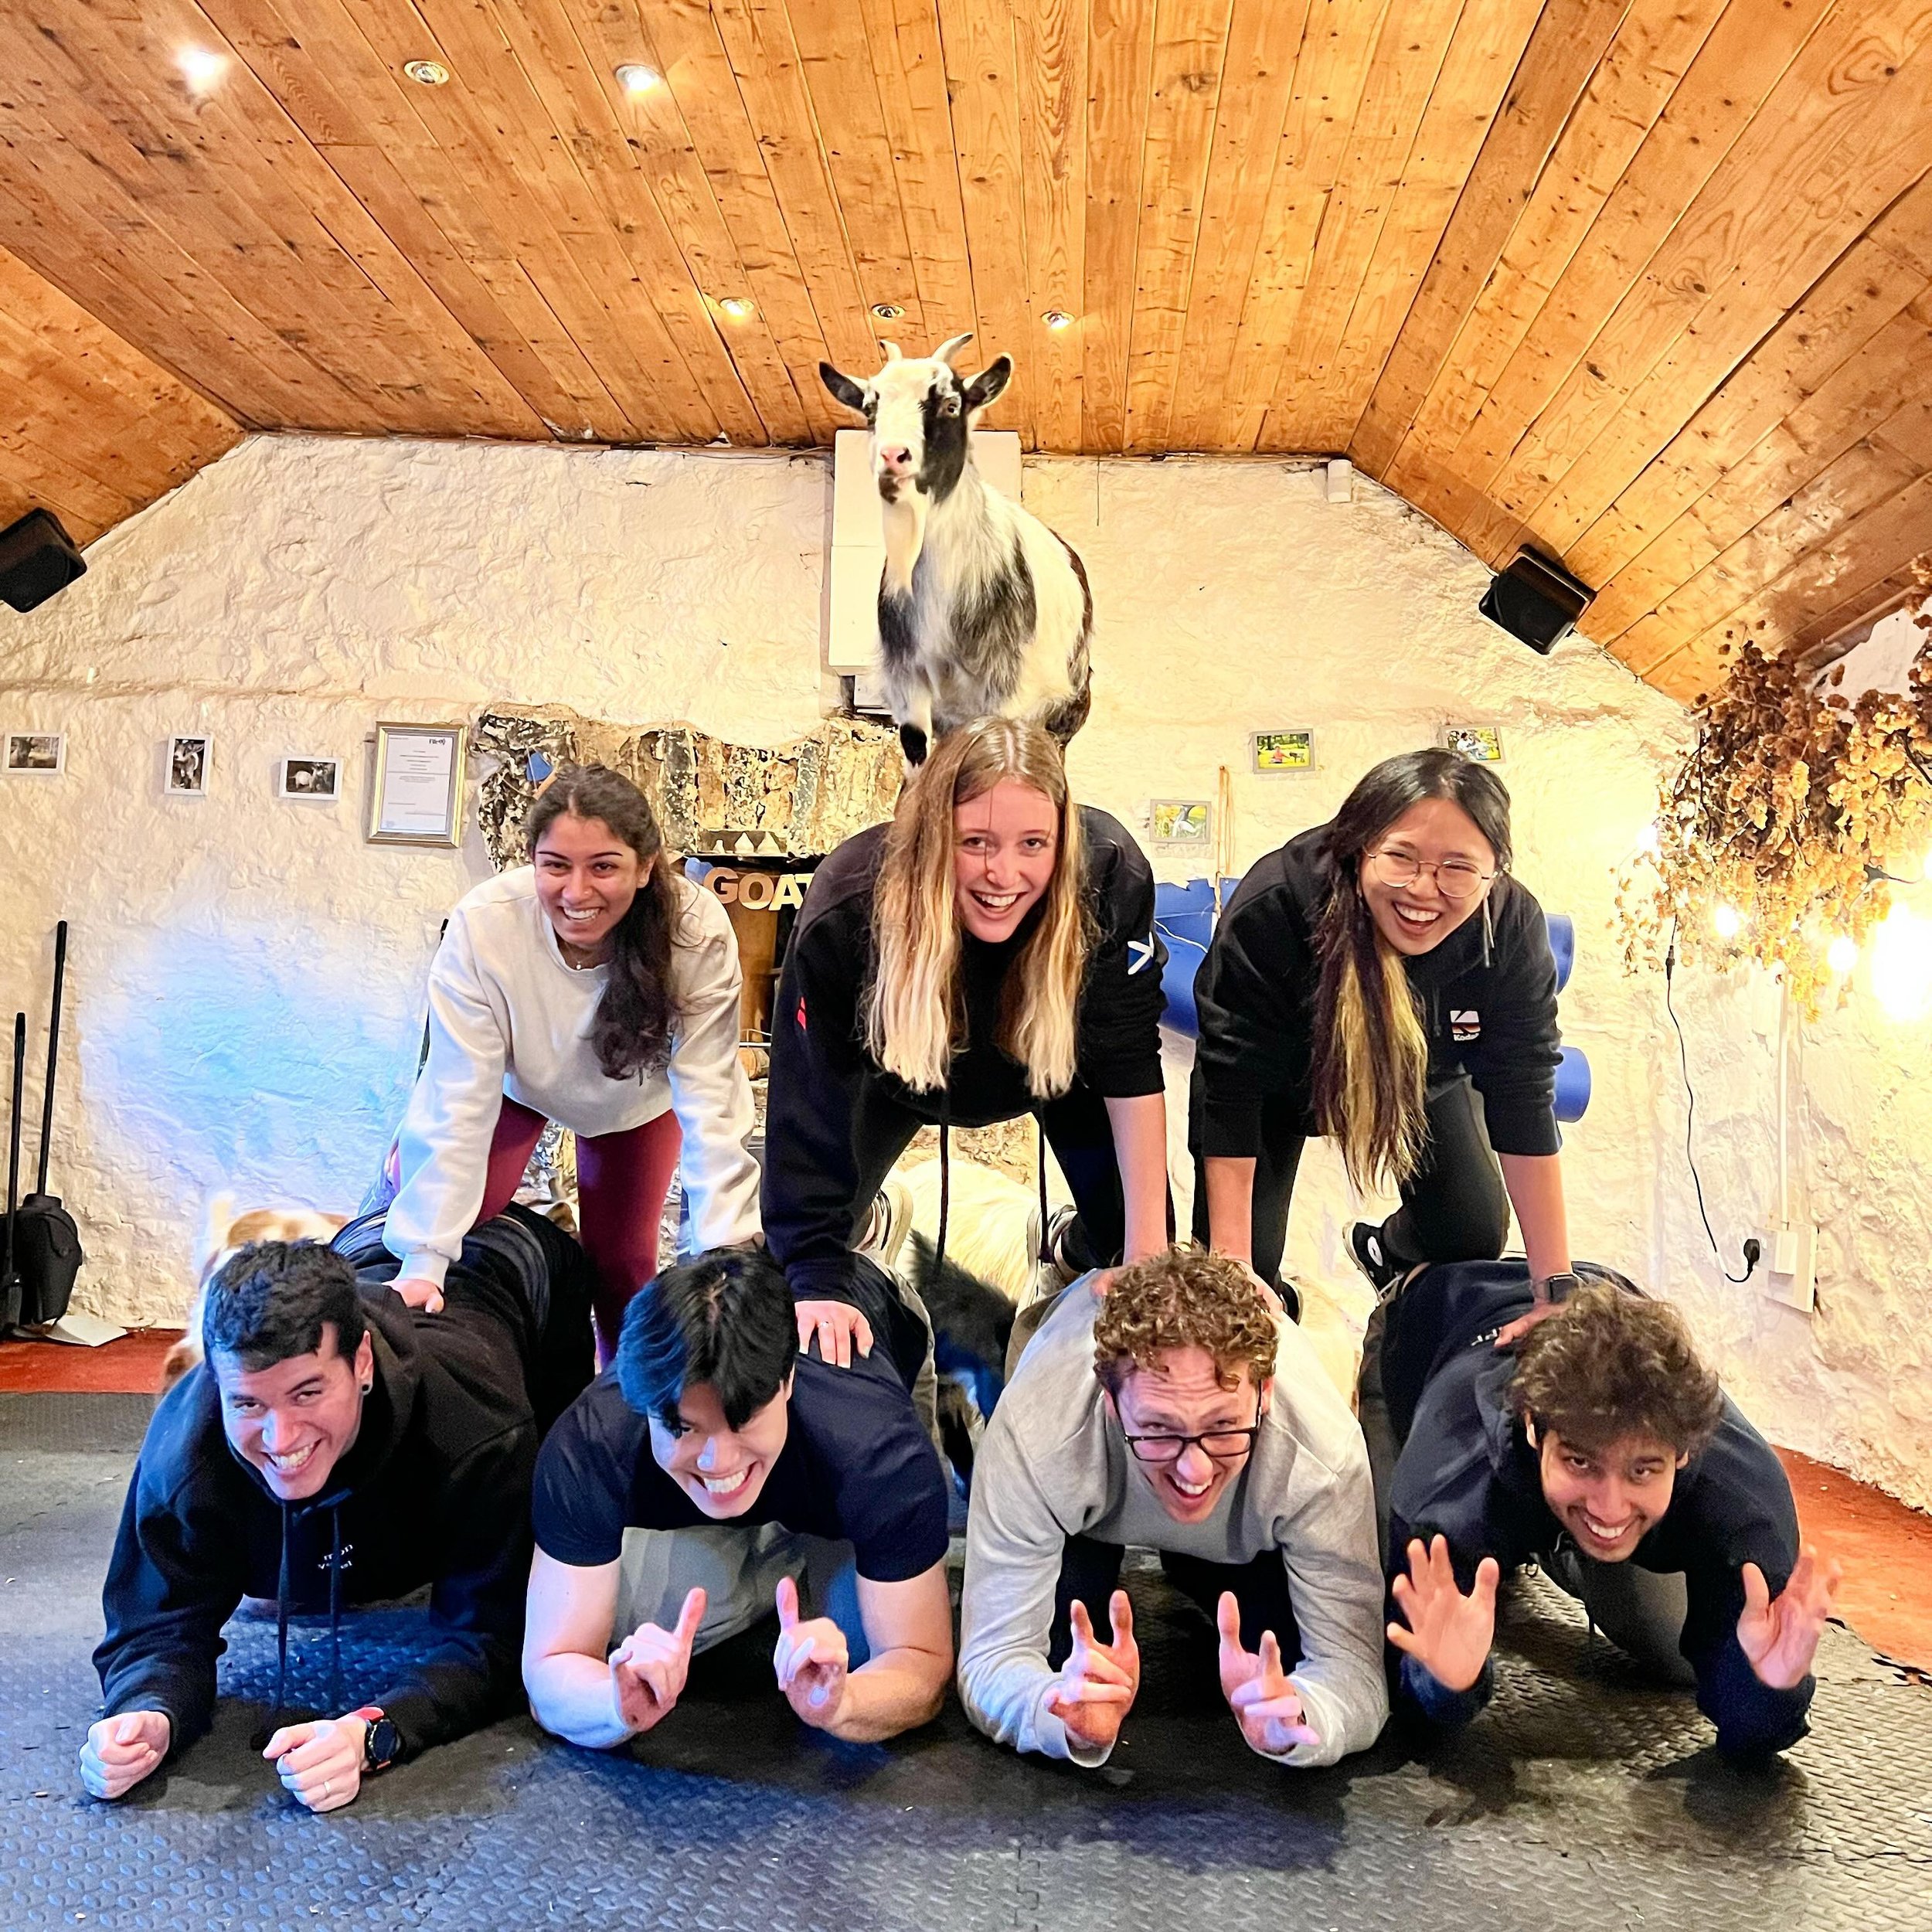 The best fun building a goat pyramid @thepilatesattic 

#goats #pygmygoats #babygoats #babyanimals #edinburgh #fife #scotland #pilates #goatpilates #farmlife #goatyoga #nonsense #goatsontop #pyramid